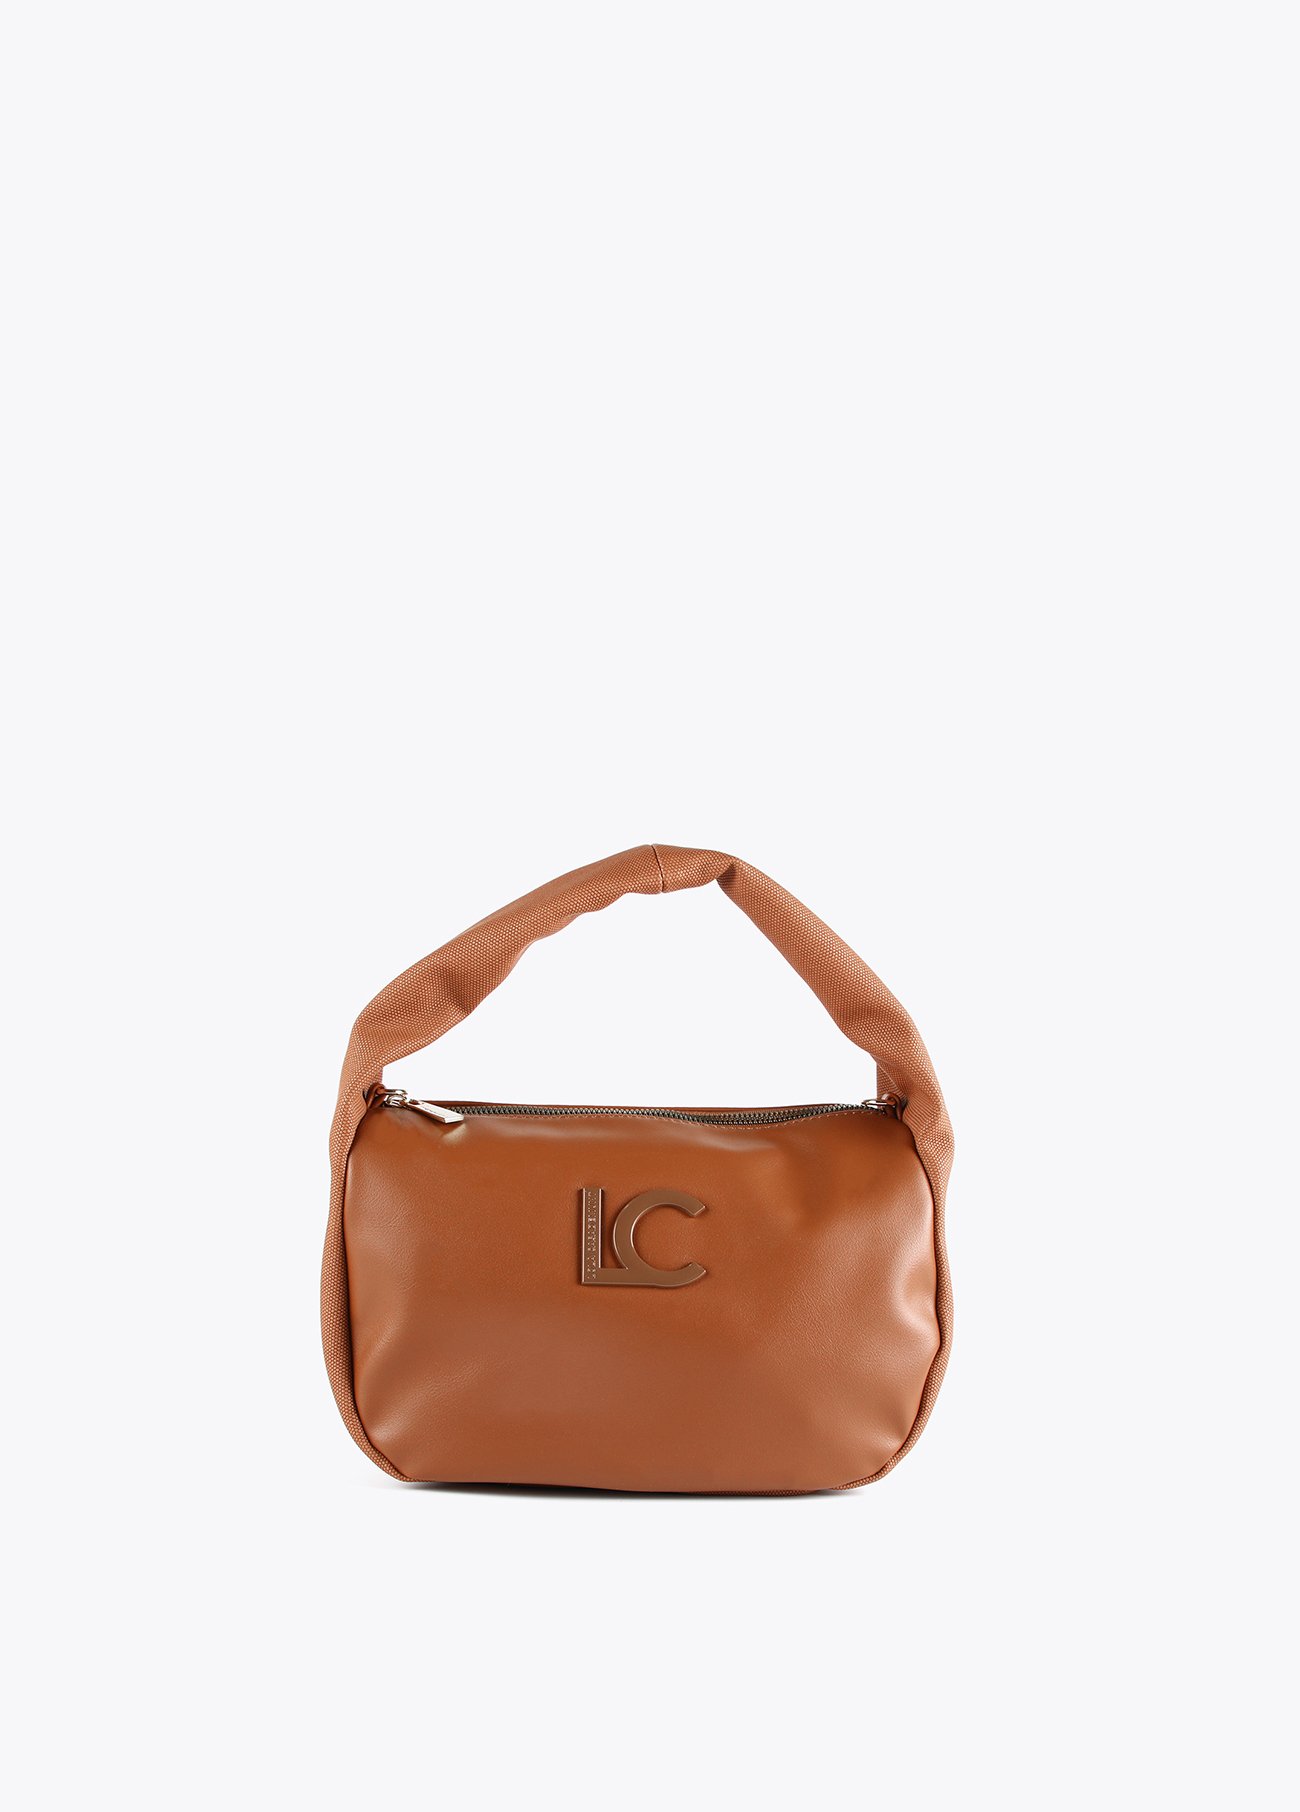 Shop LC Faux Leather Crossbody Bag with Shoulder Adjustable Strap